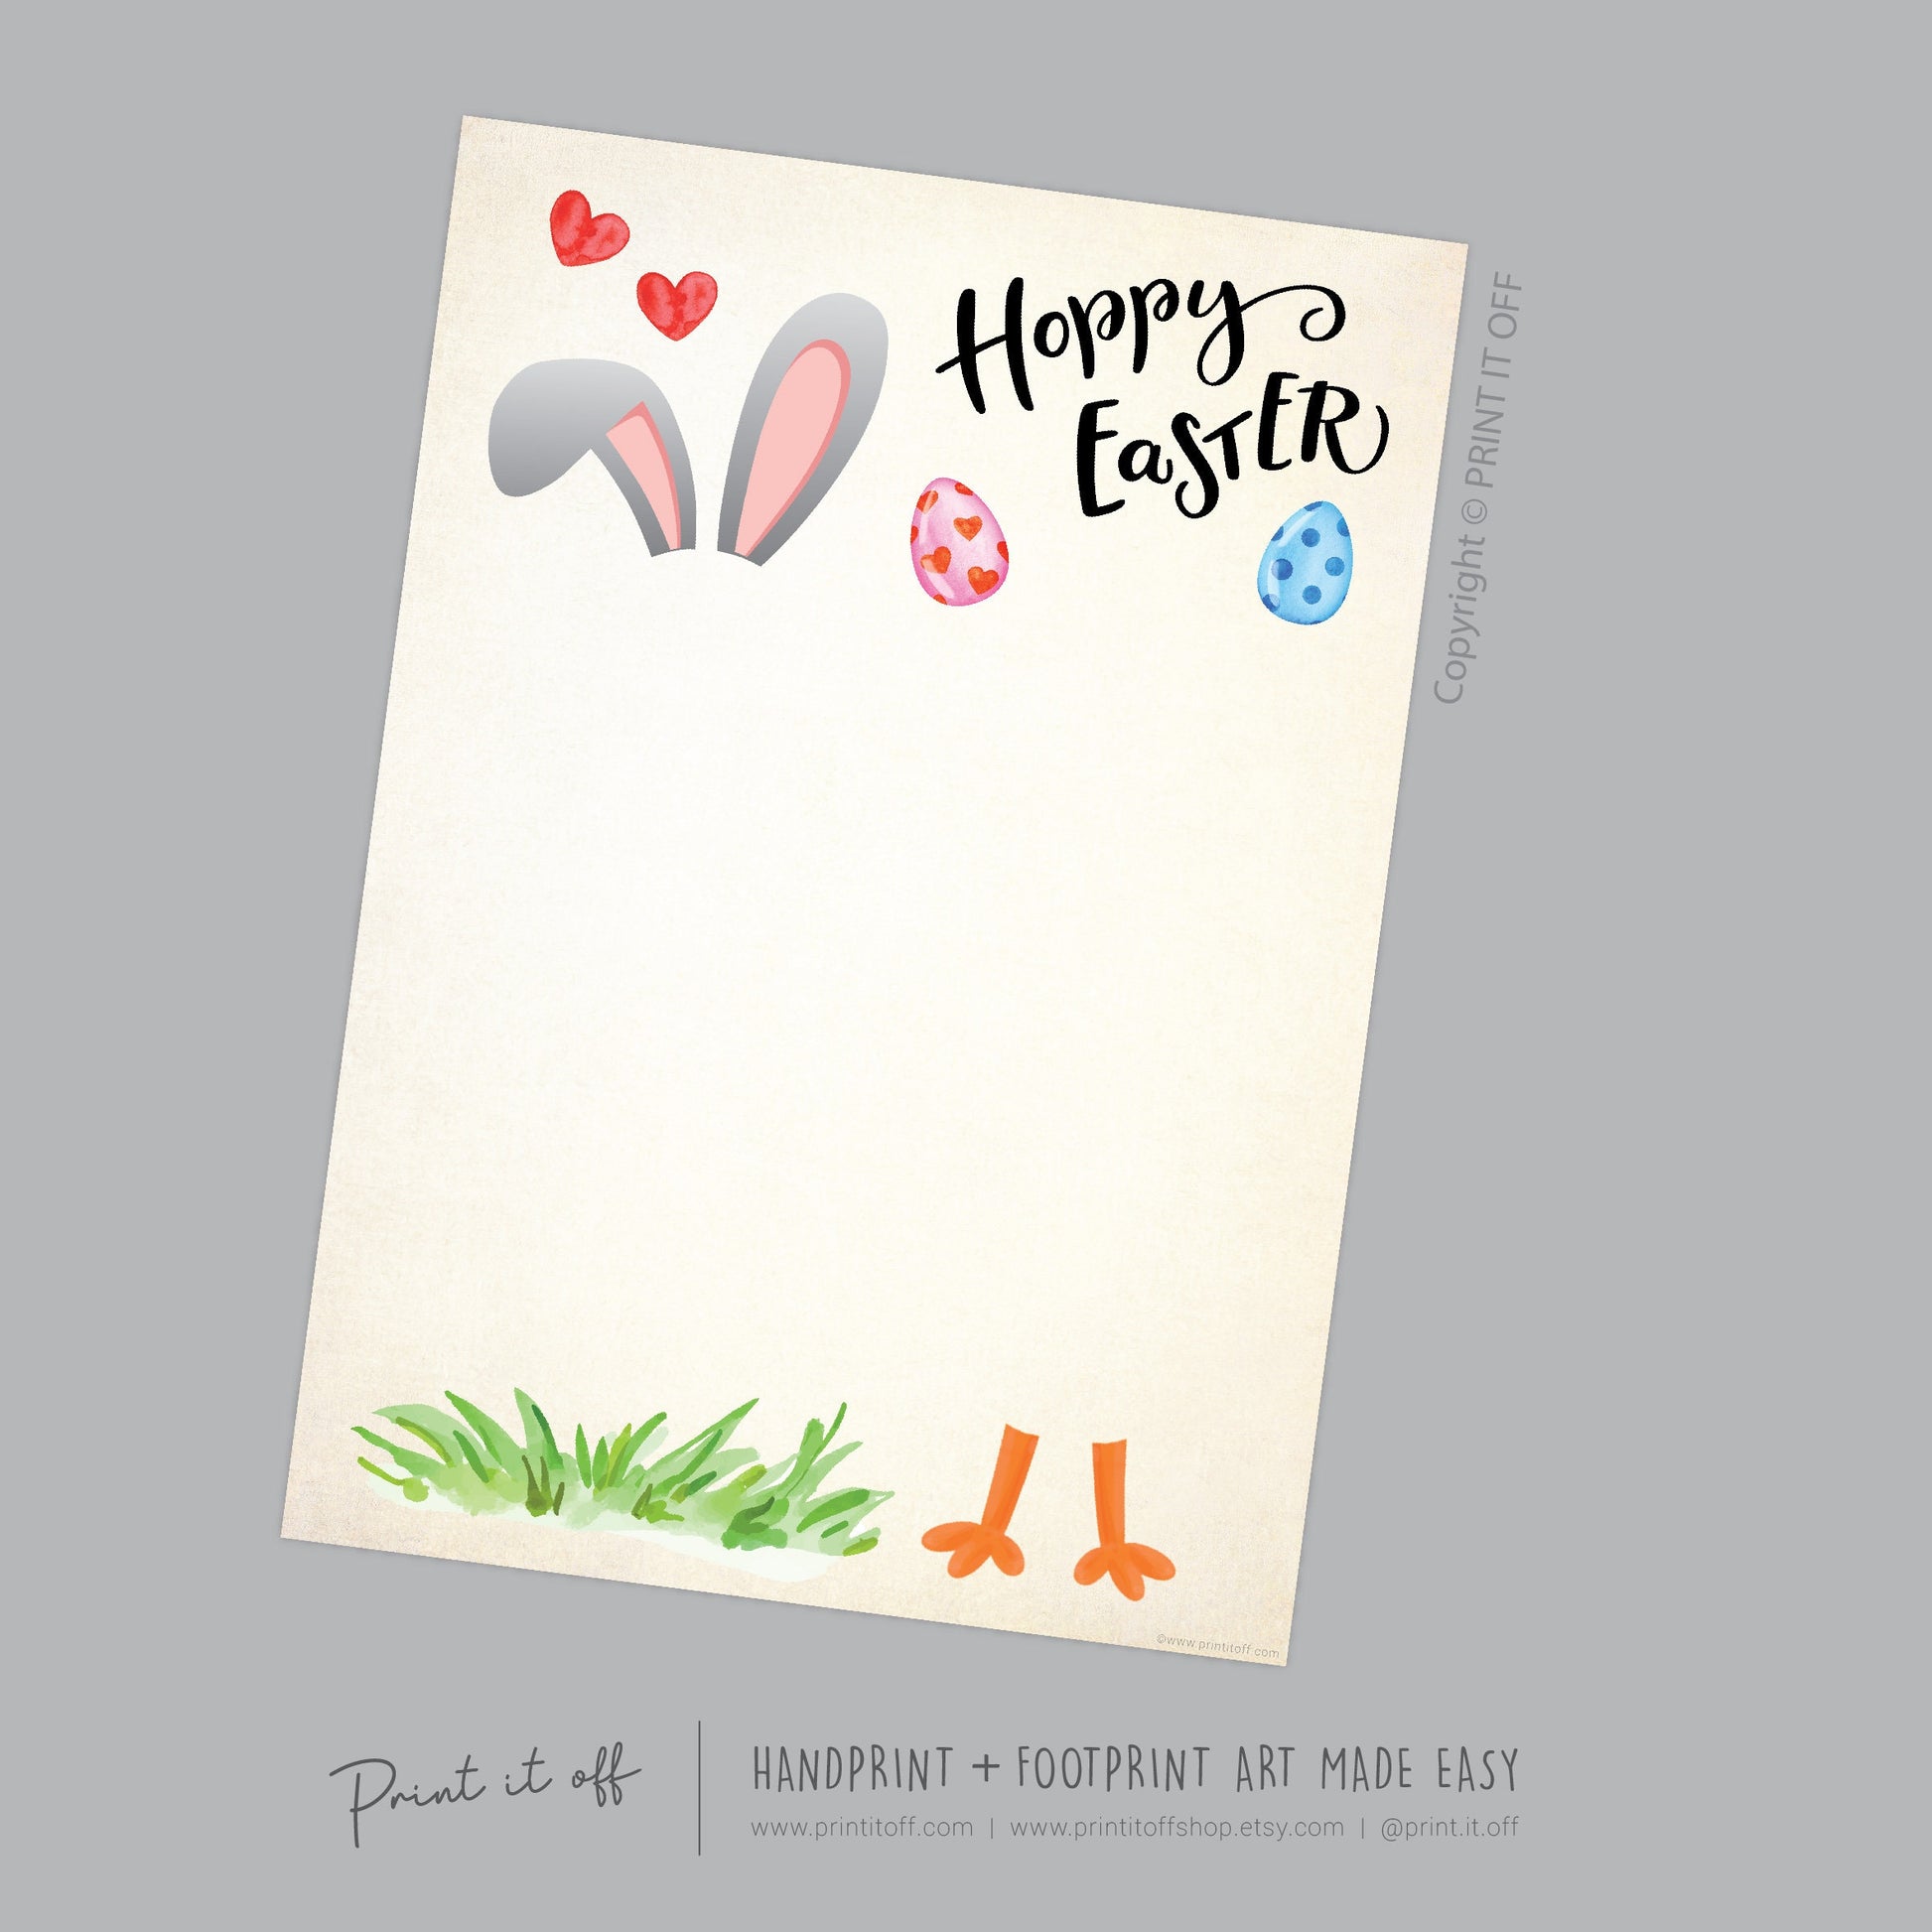 Bunny Chick / Footprint Handprint Feet Foot Art Craft / Hoppy Happy Easter / Kids Baby Toddler / Keepsake DIY Card / Print It Off